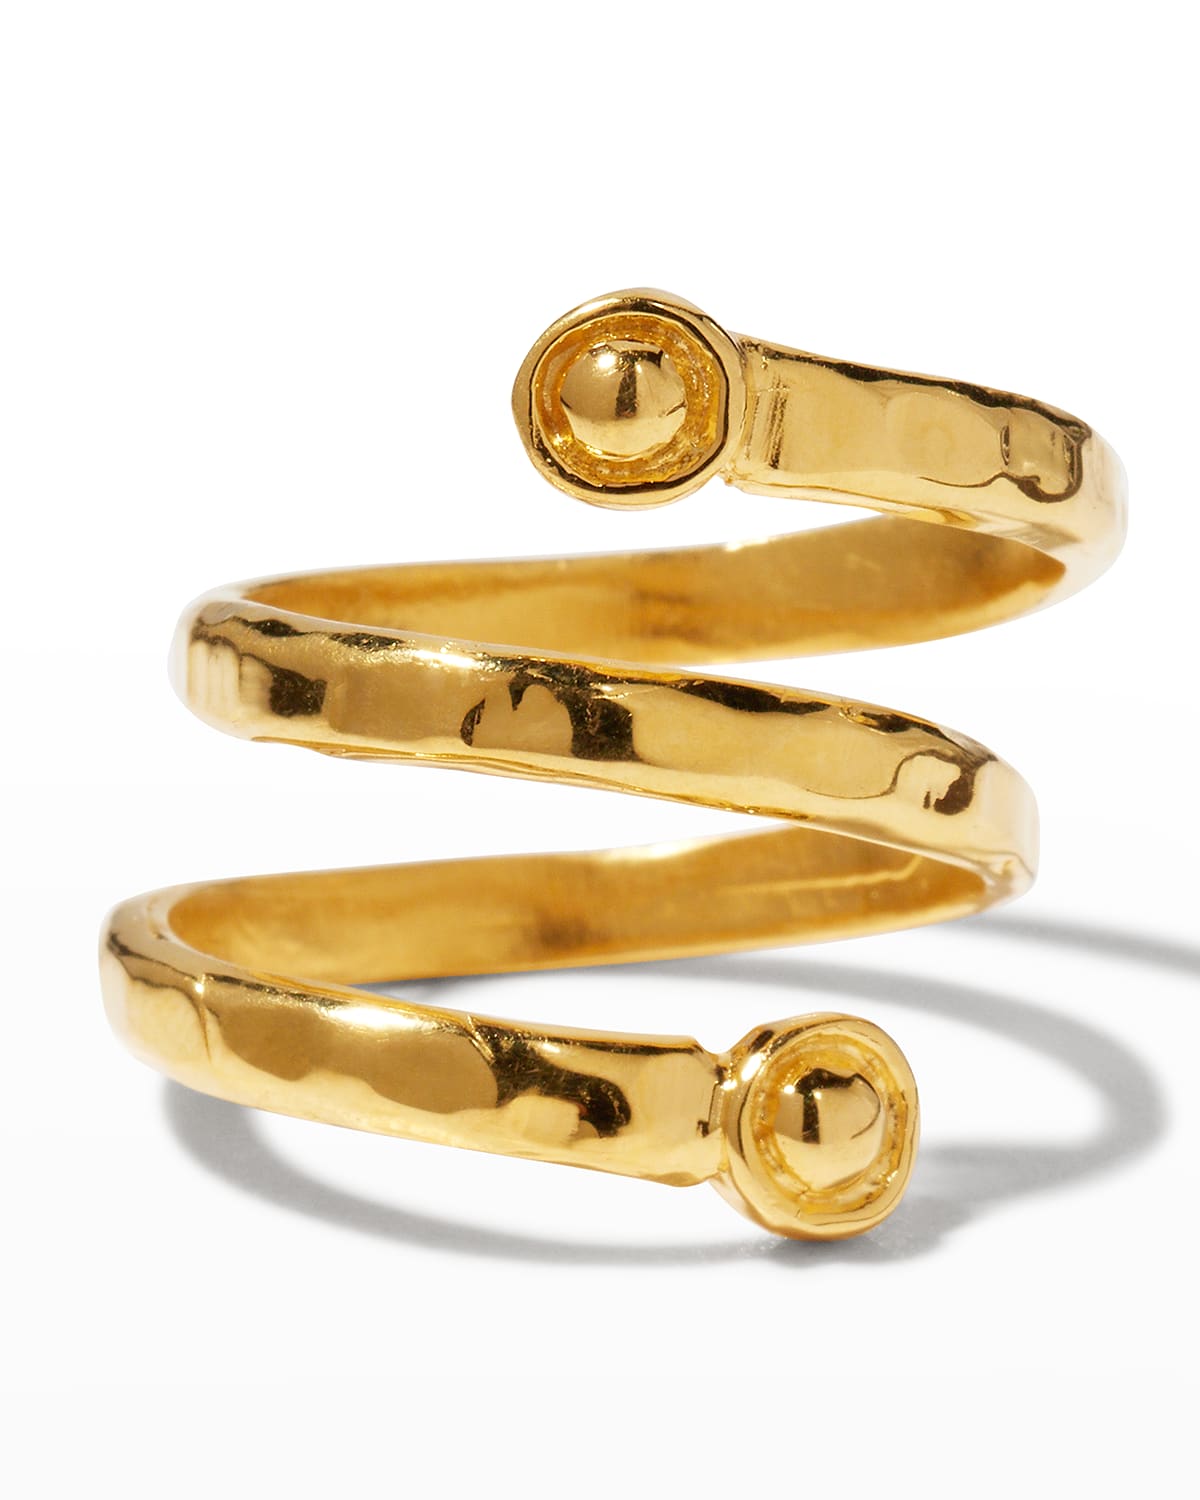 Devon Leigh Gold Swirl Ring, Adjustable to Size 6-8